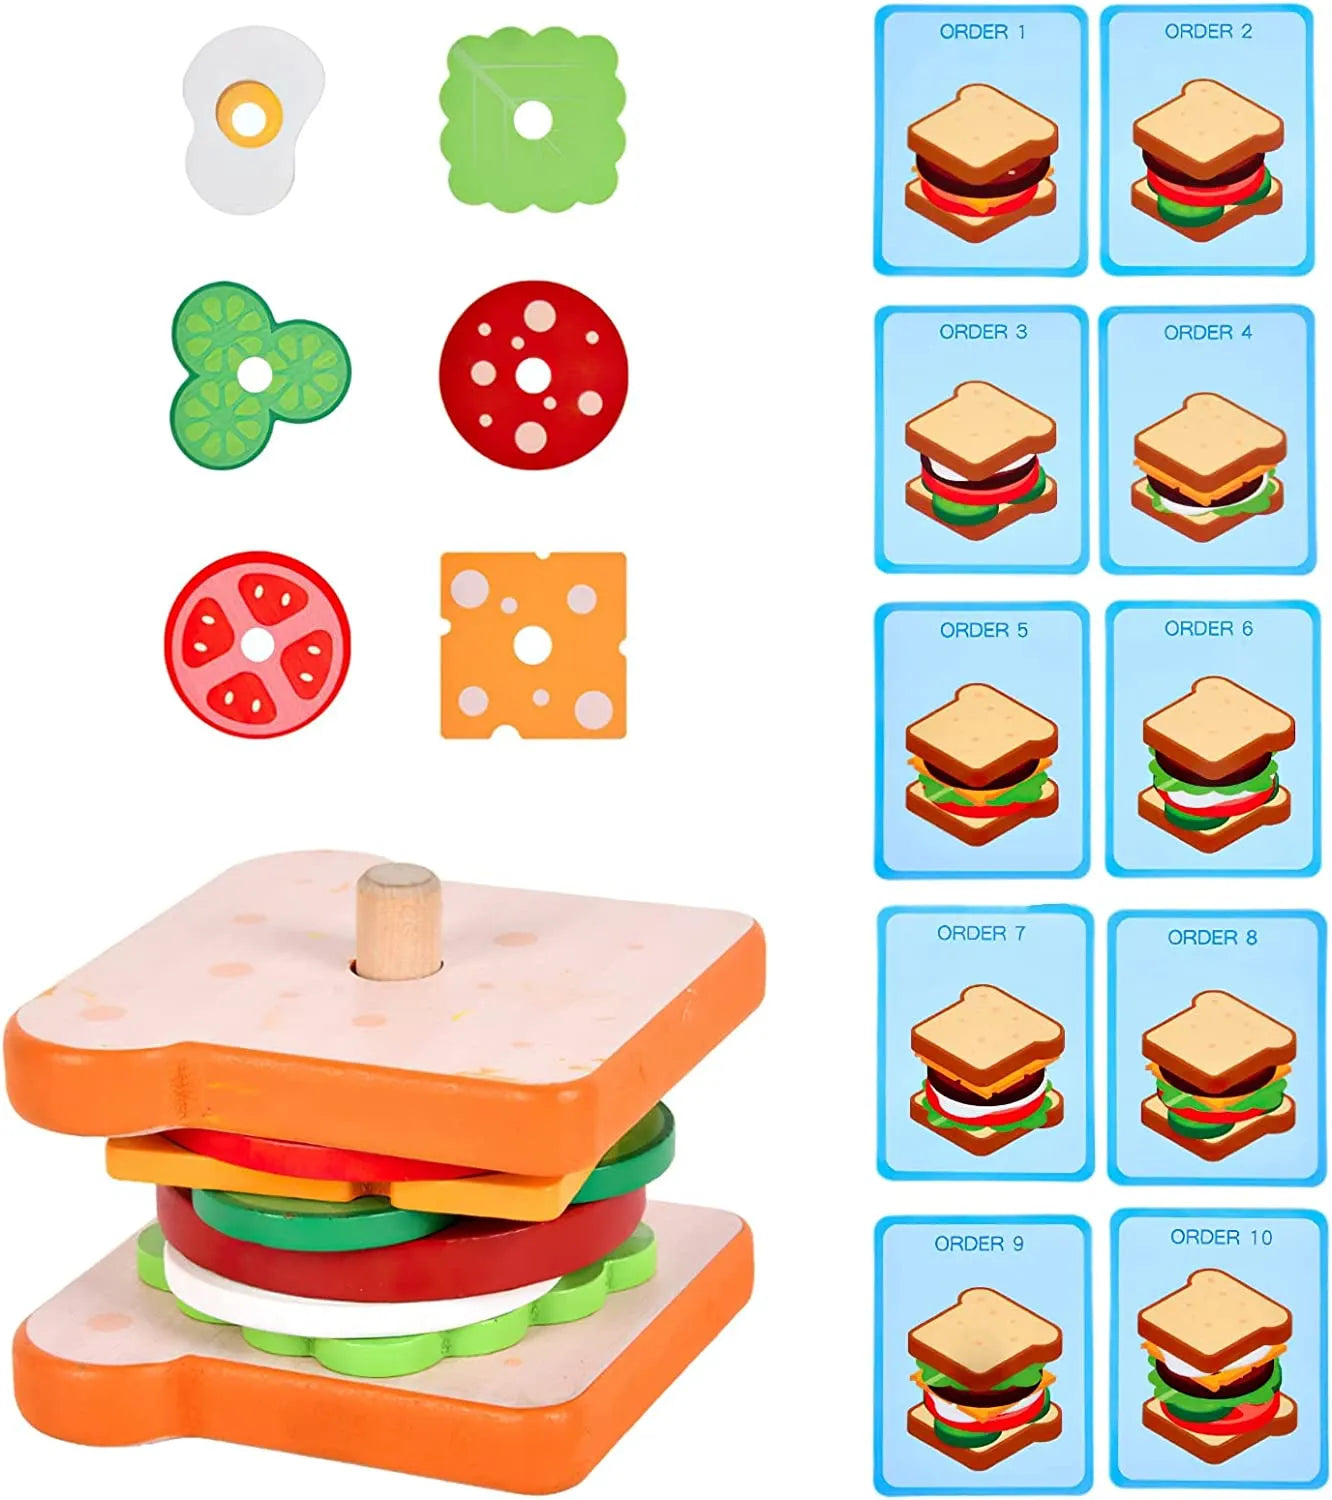 BUY 1, GET 1 FREE | Toy Hamburger or Sandwich Playset